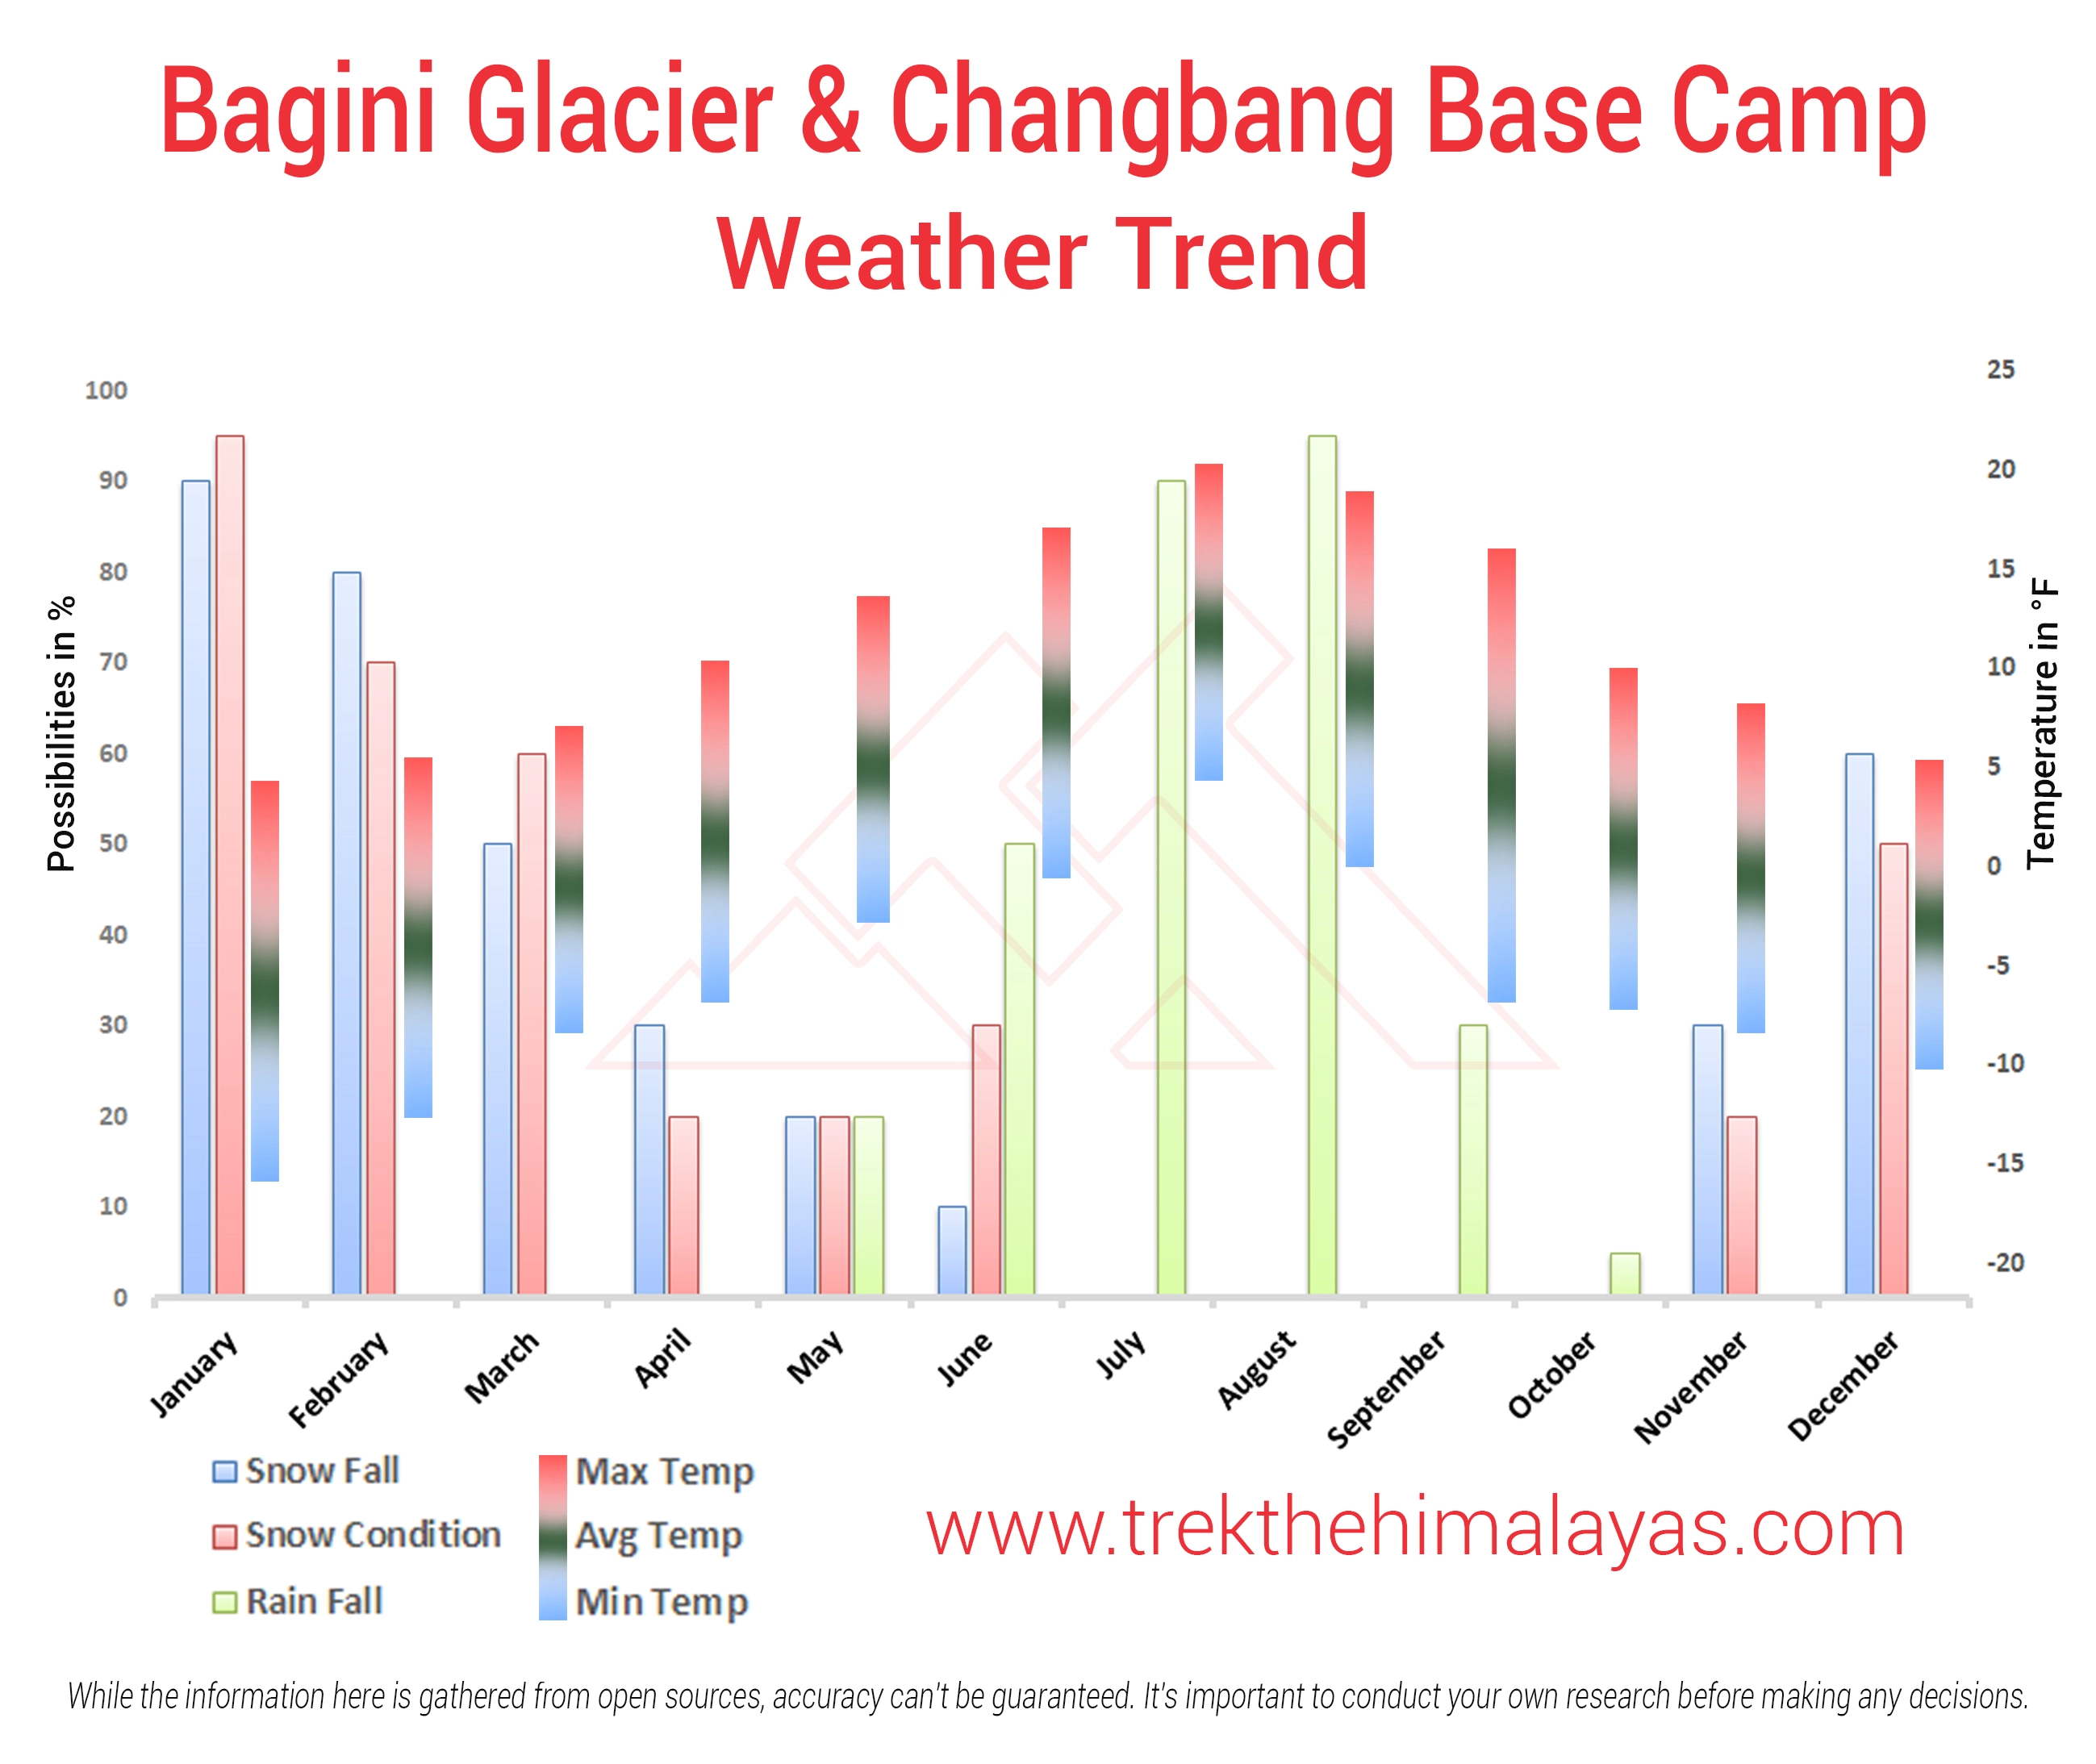 Bagini Glacier & Changbang Base Camp Maps